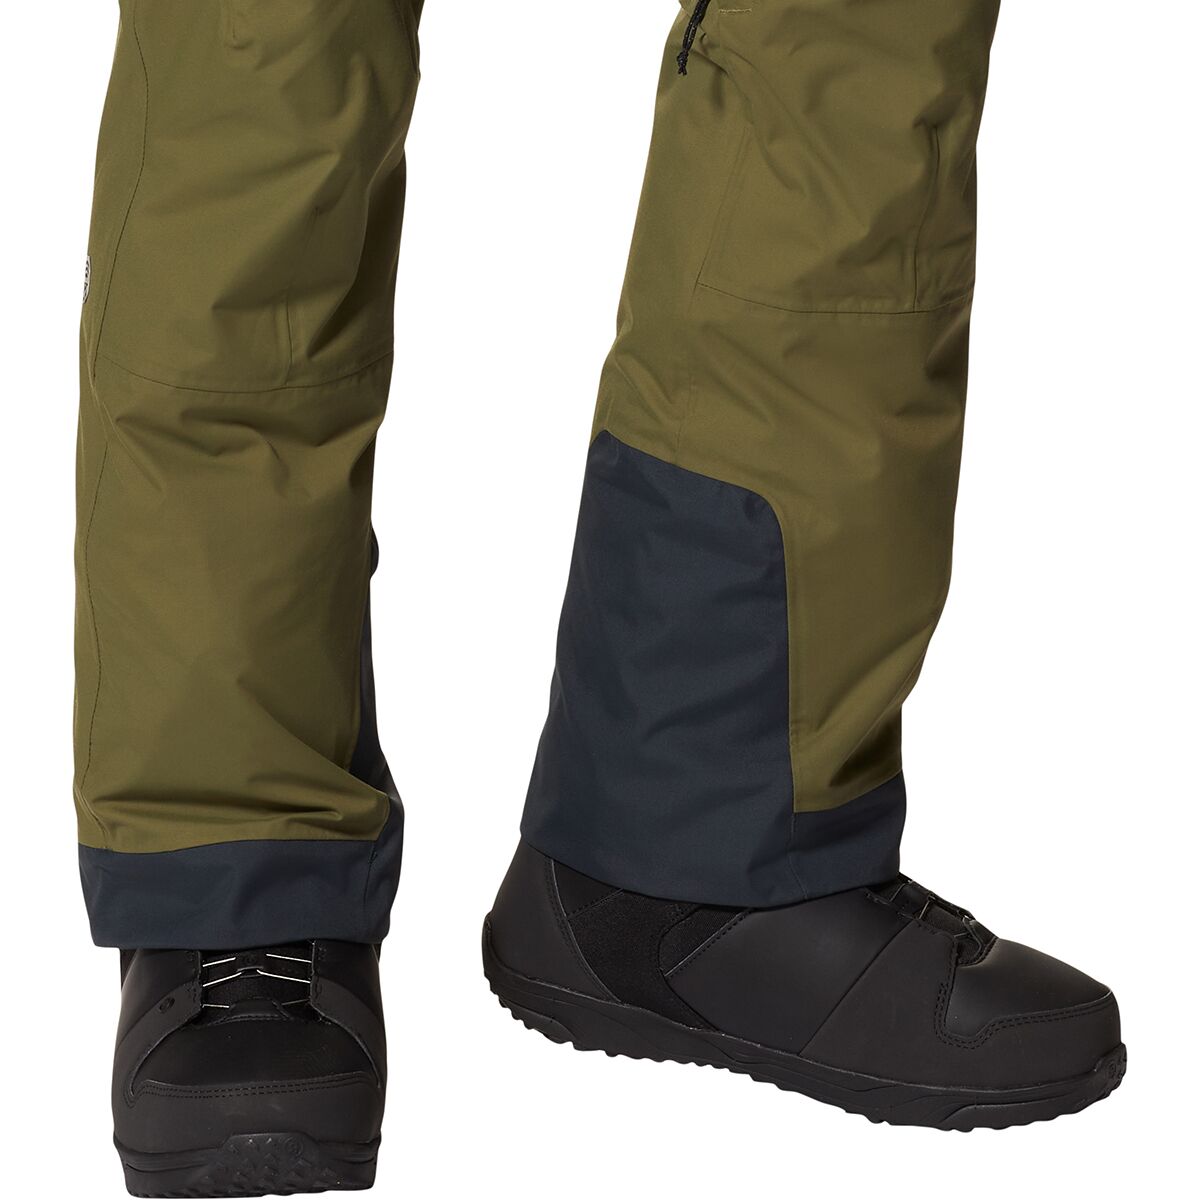  Mountain Hardwear Firefall 2 Insulated Pant - Men